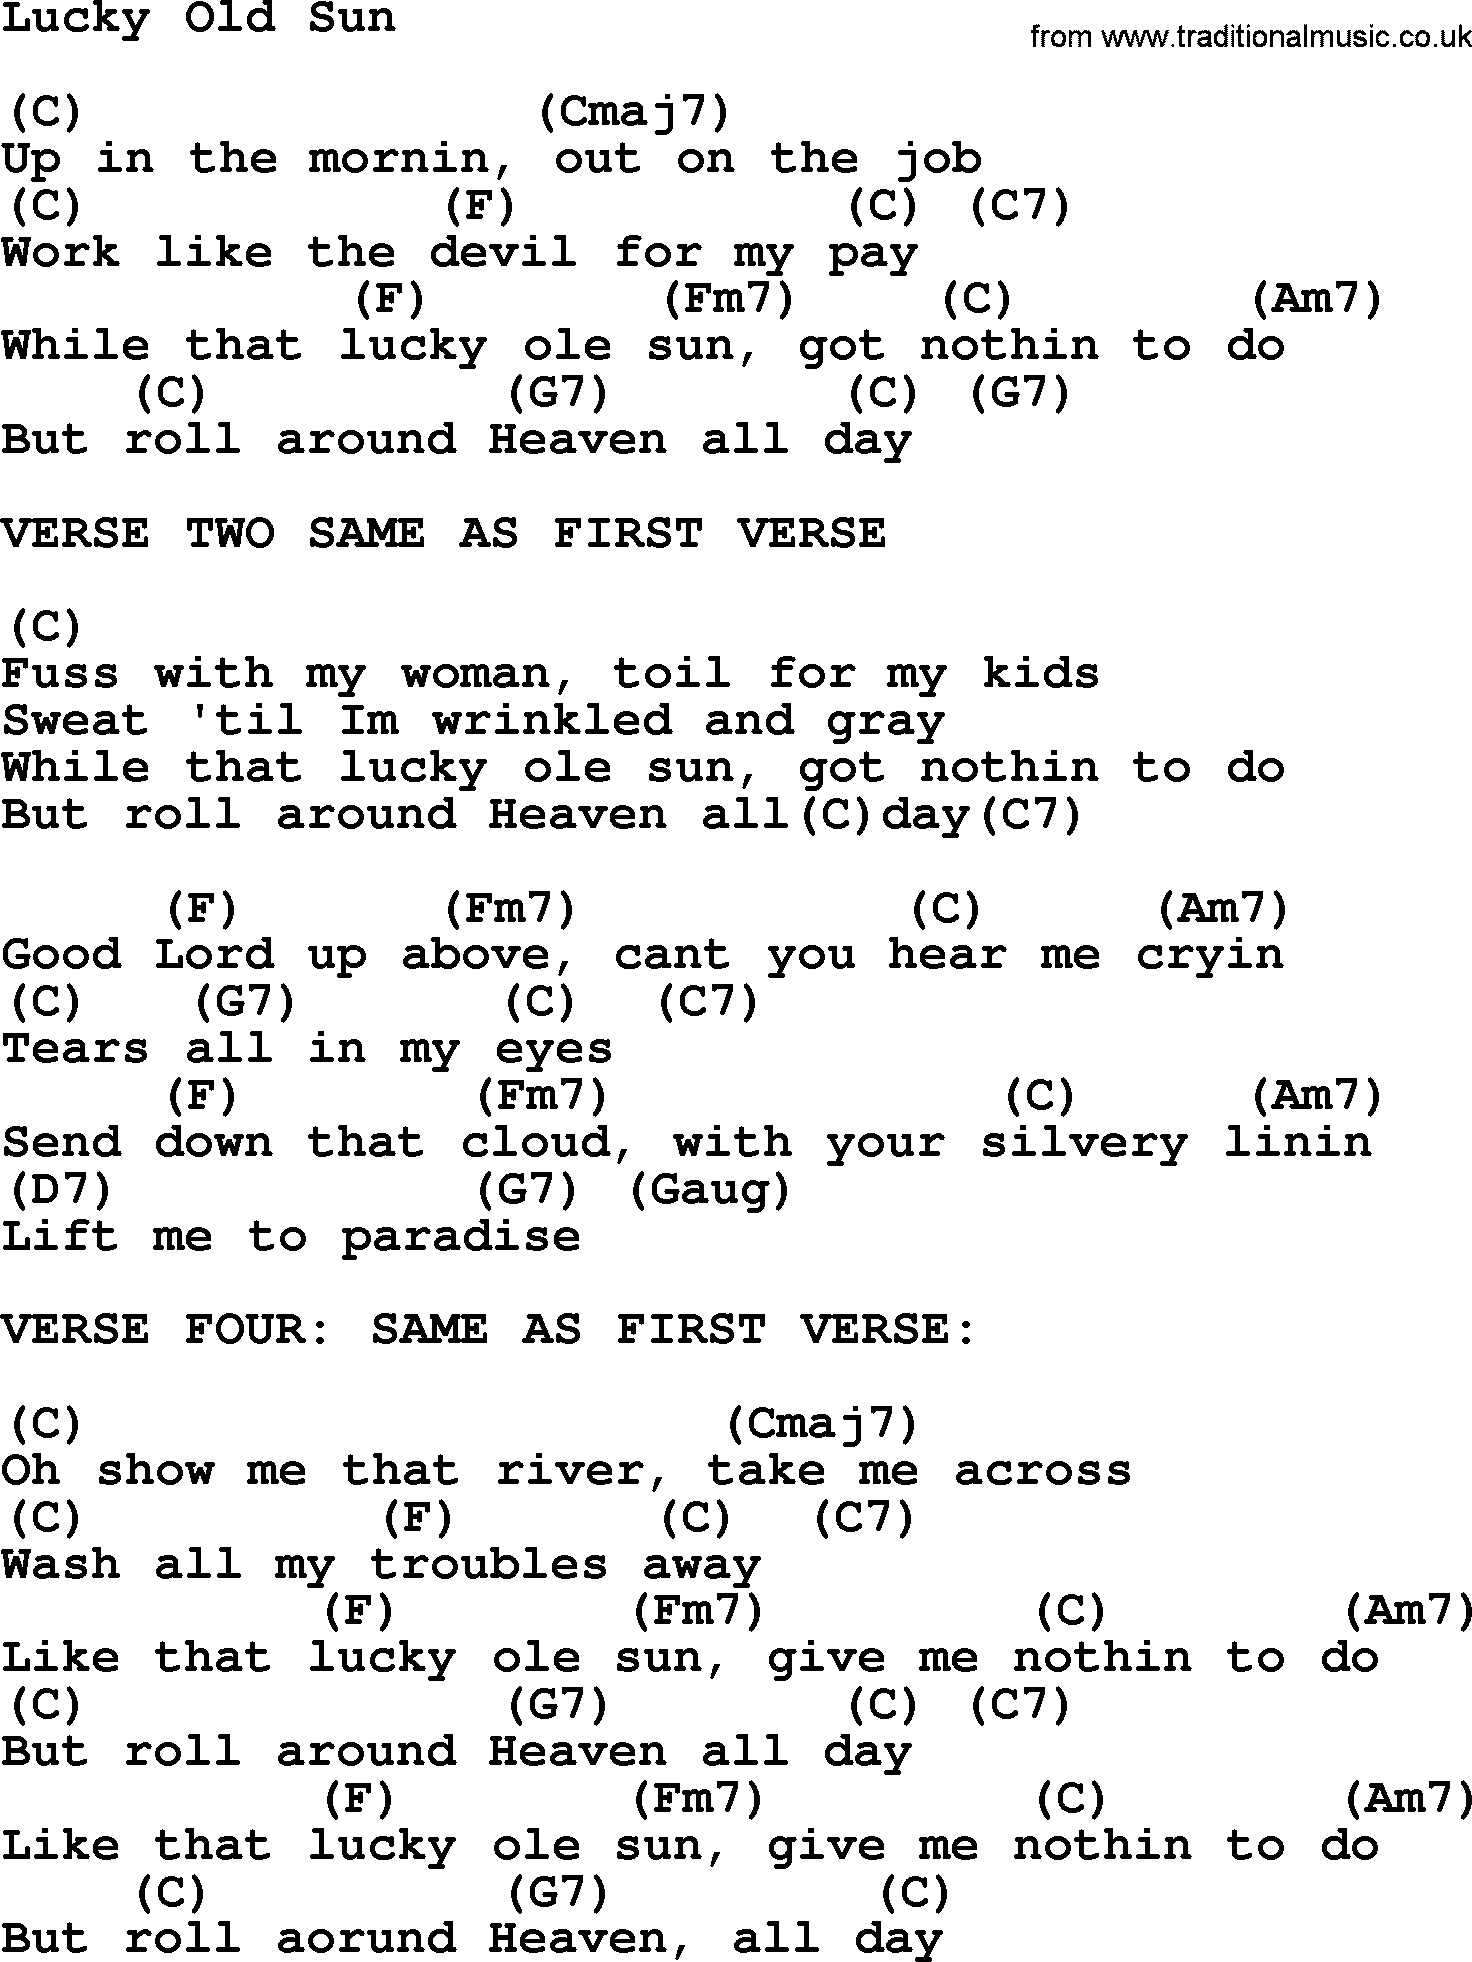 Johnny Cash song Lucky Old Sun, lyrics and chords